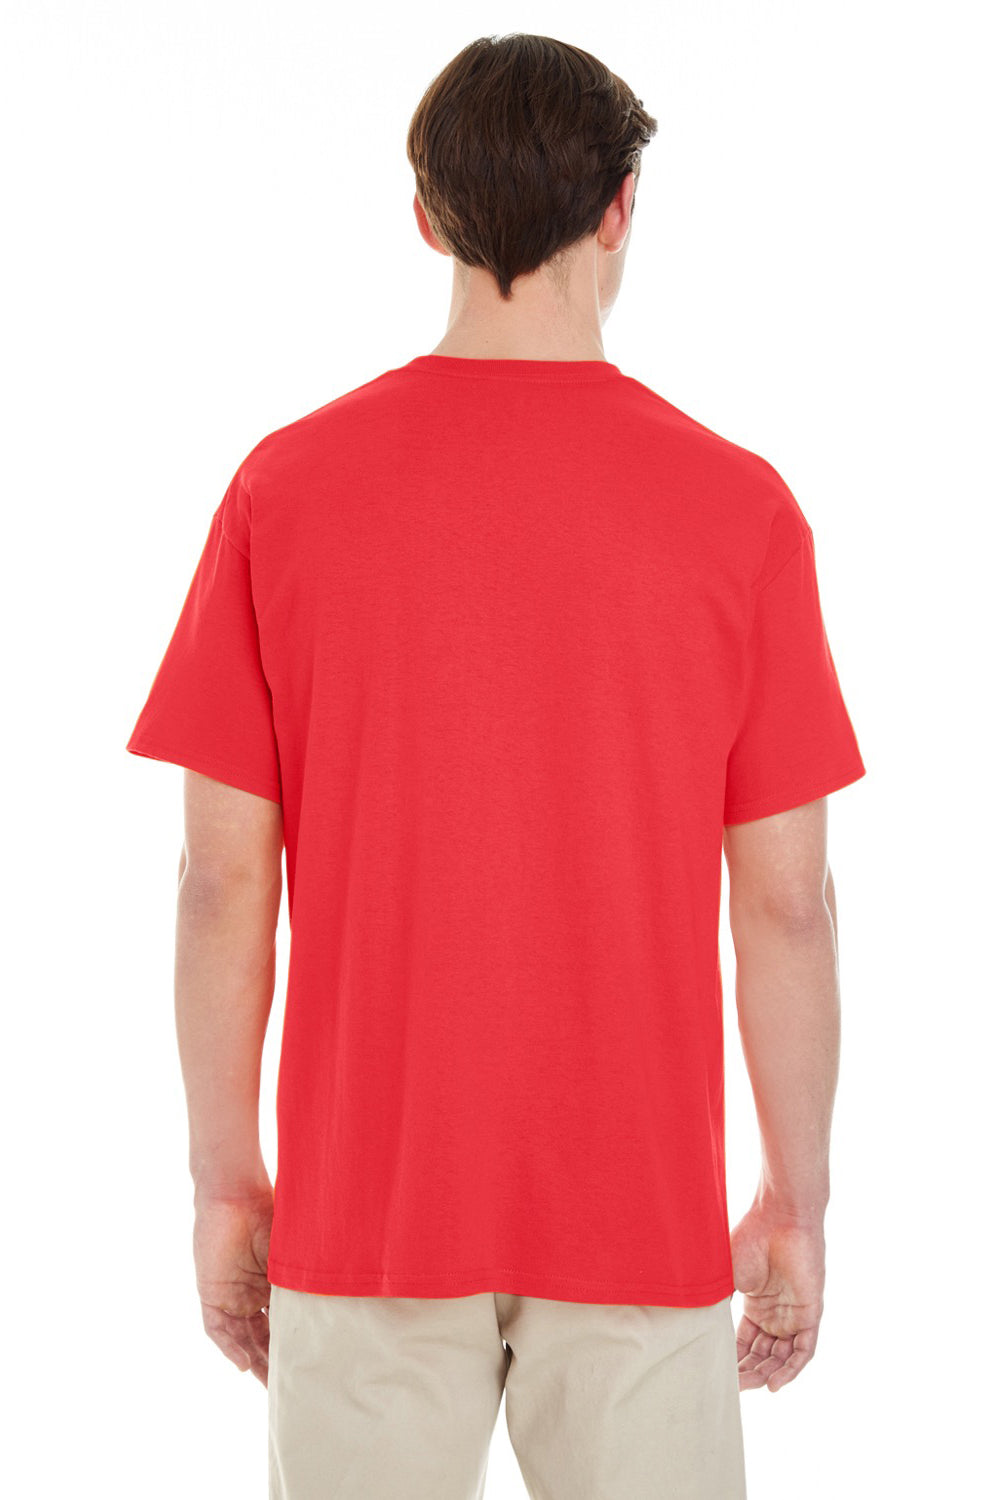 Gildan G530 Mens Short Sleeve Crewneck T-Shirt w/ Pocket Red Back